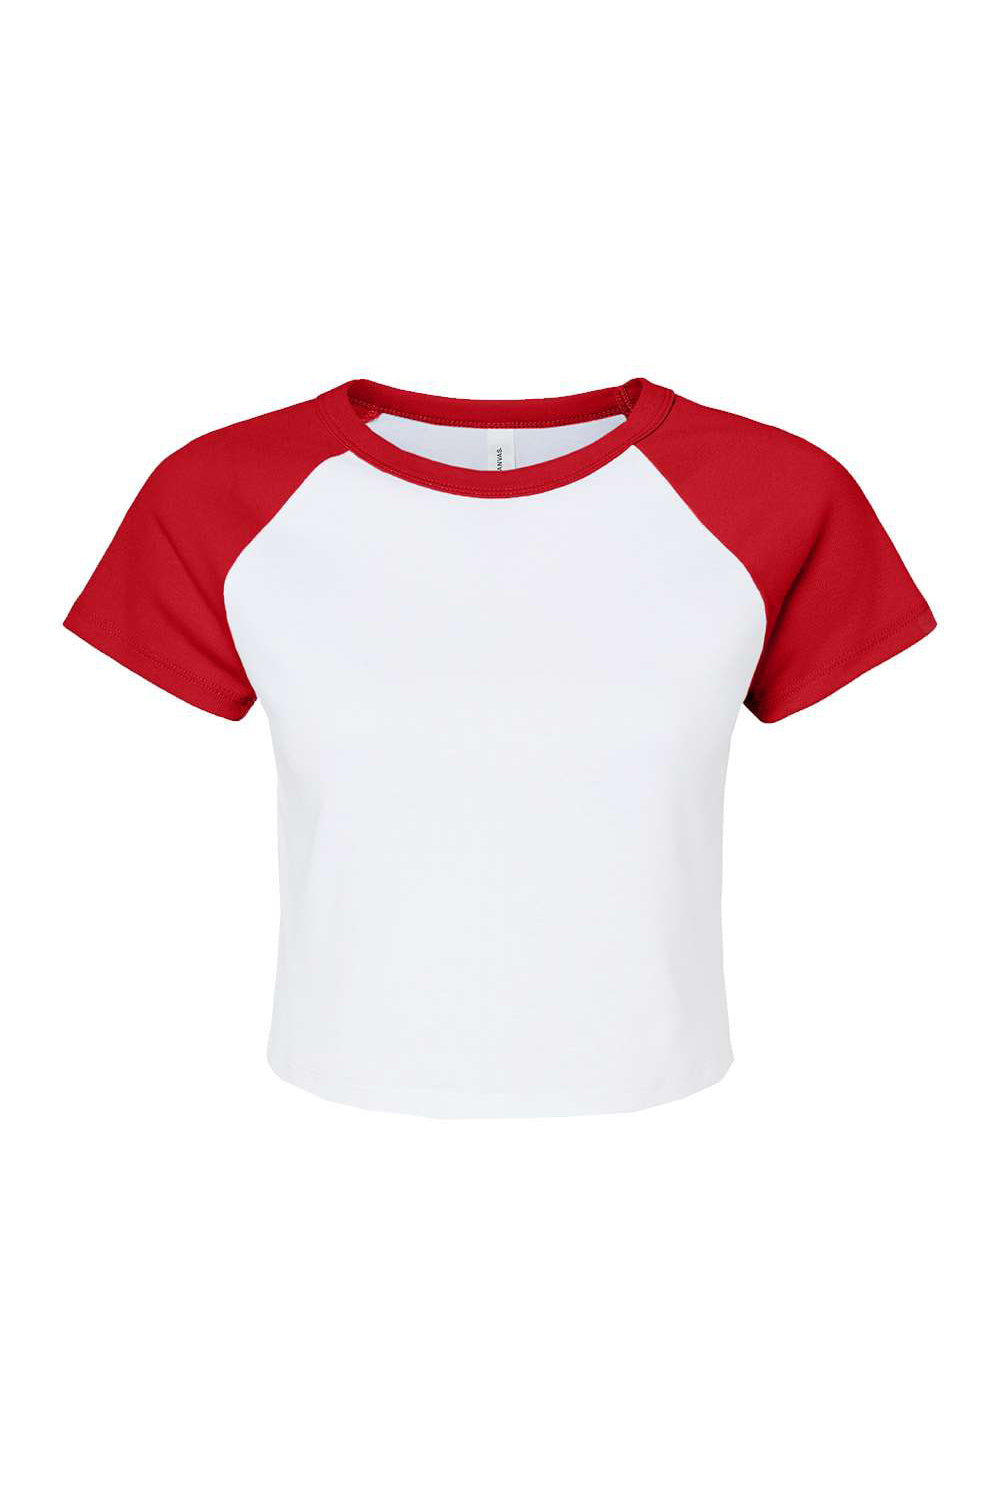 Bella + Canvas 1201 Womens Micro Ribbed Raglan Short Sleeve Crewneck Baby T-Shirt White/Red Flat Front